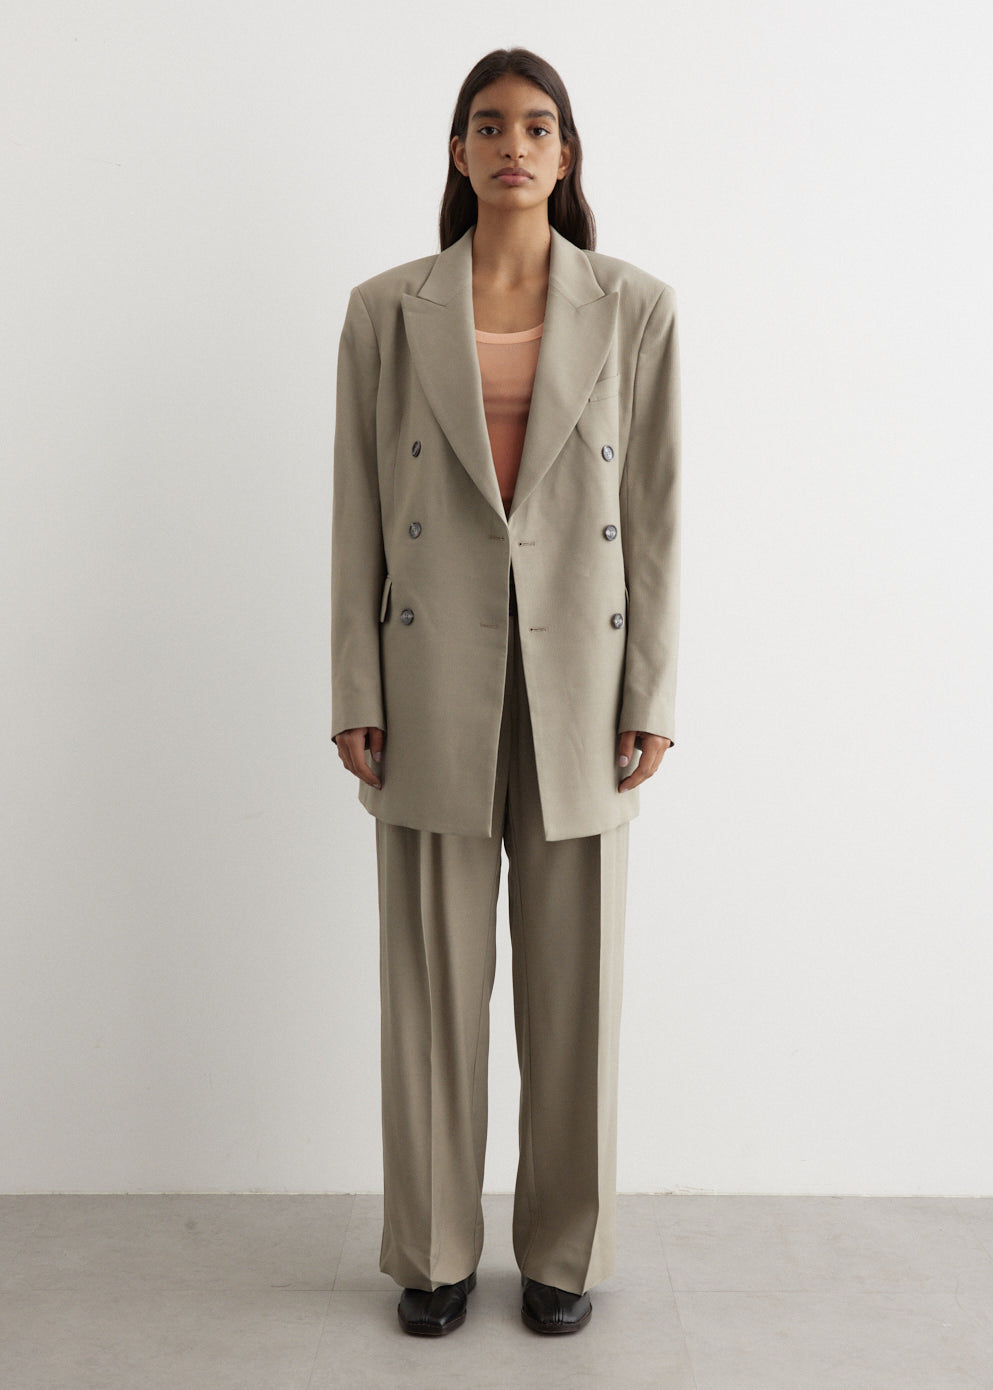 Acne Studios – Women's suit jacket